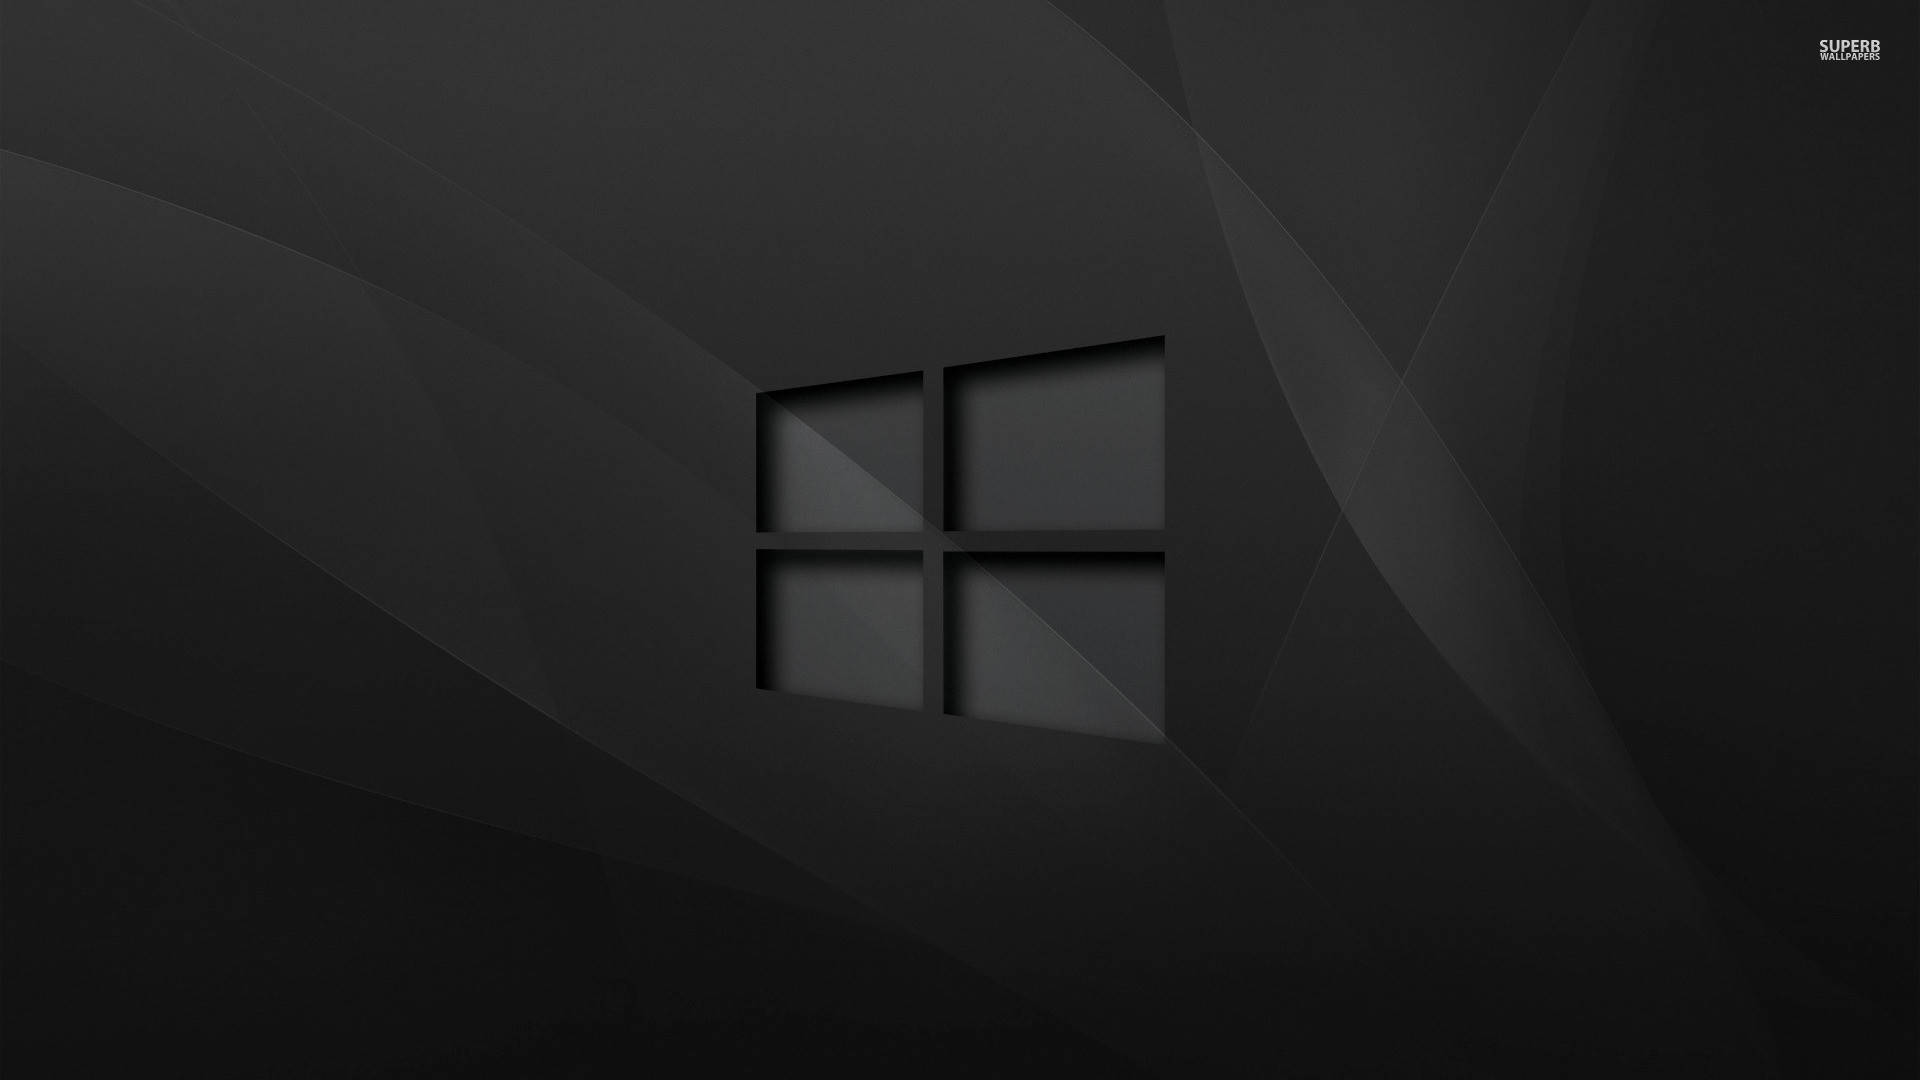 Sort Windows 10 Hd Trækul Baggrund Wallpaper